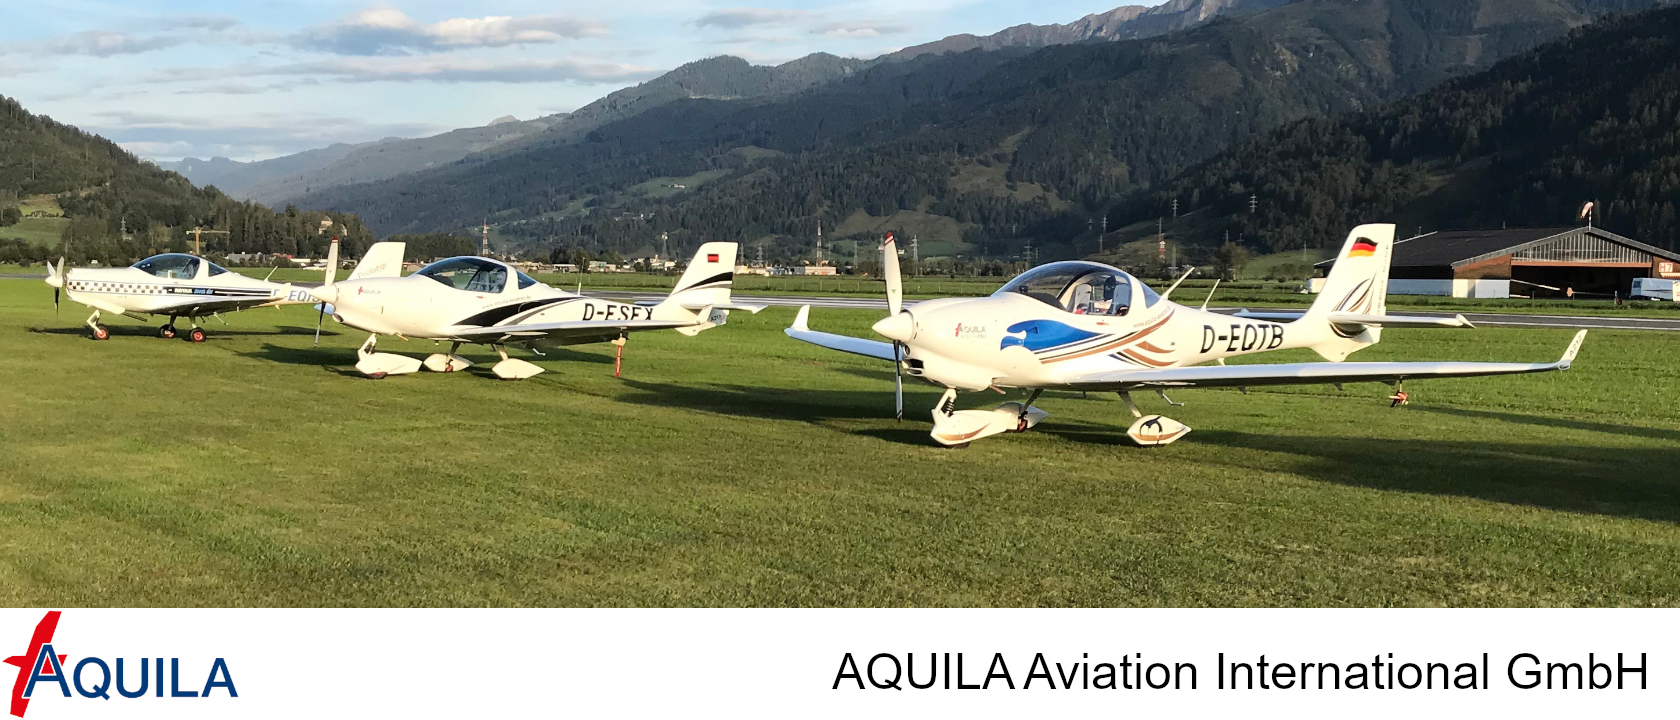 AQUILA Aviation International GmbH